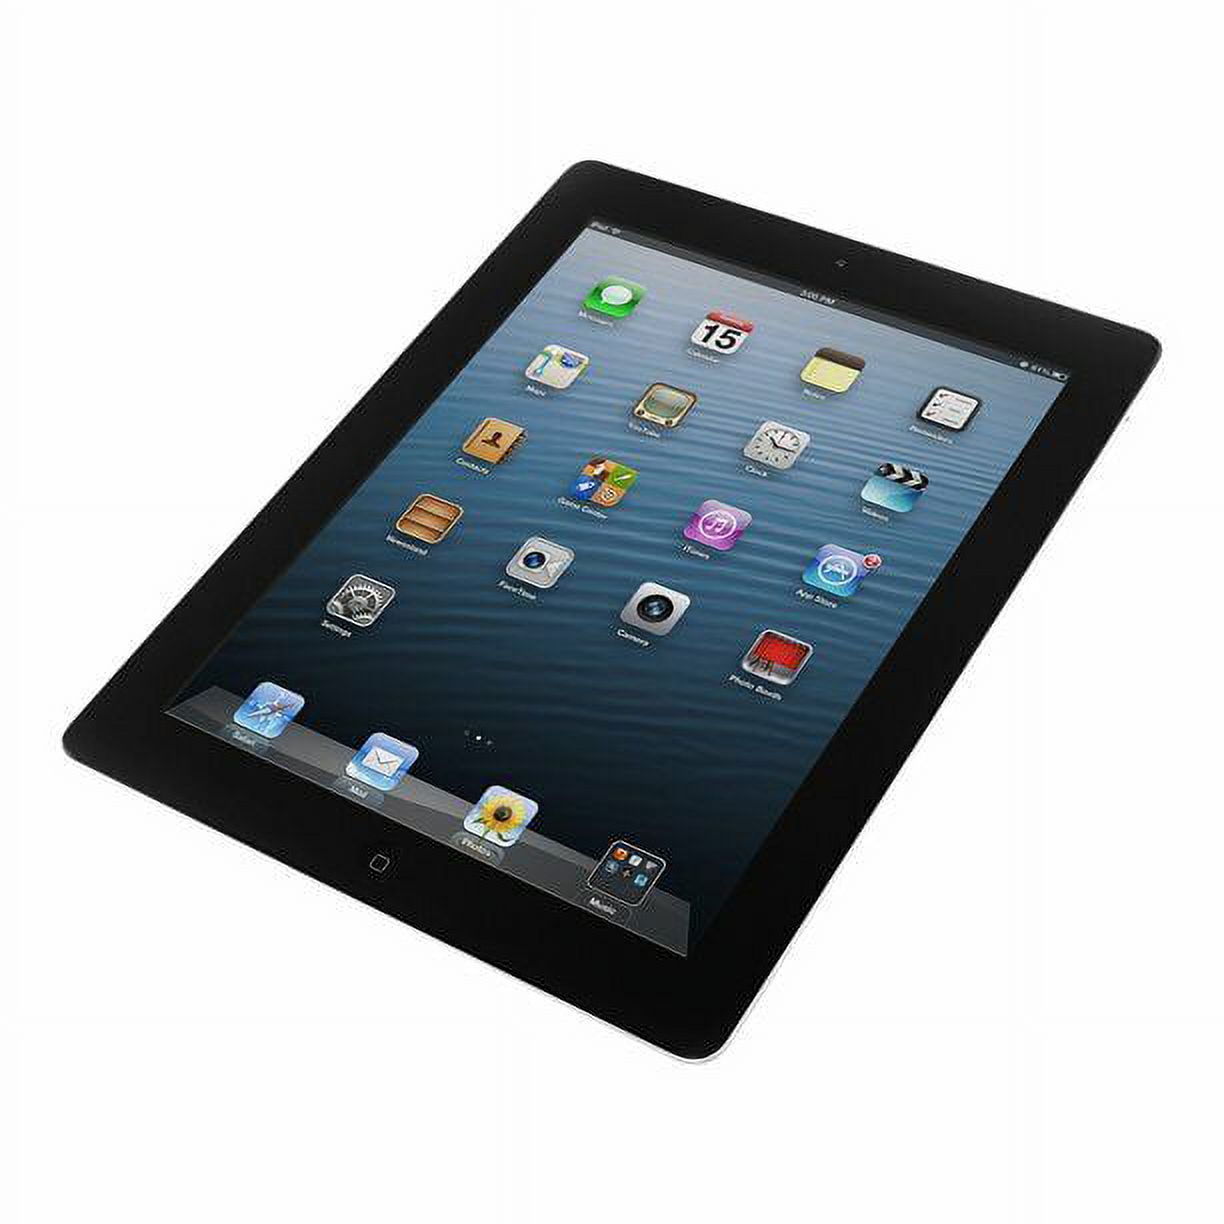 Restored Apple iPad 2 9.7" Display 16GB Wi-Fi OnlyTabel PC (Black) - MC769LL/A (Refurbished) - image 7 of 7